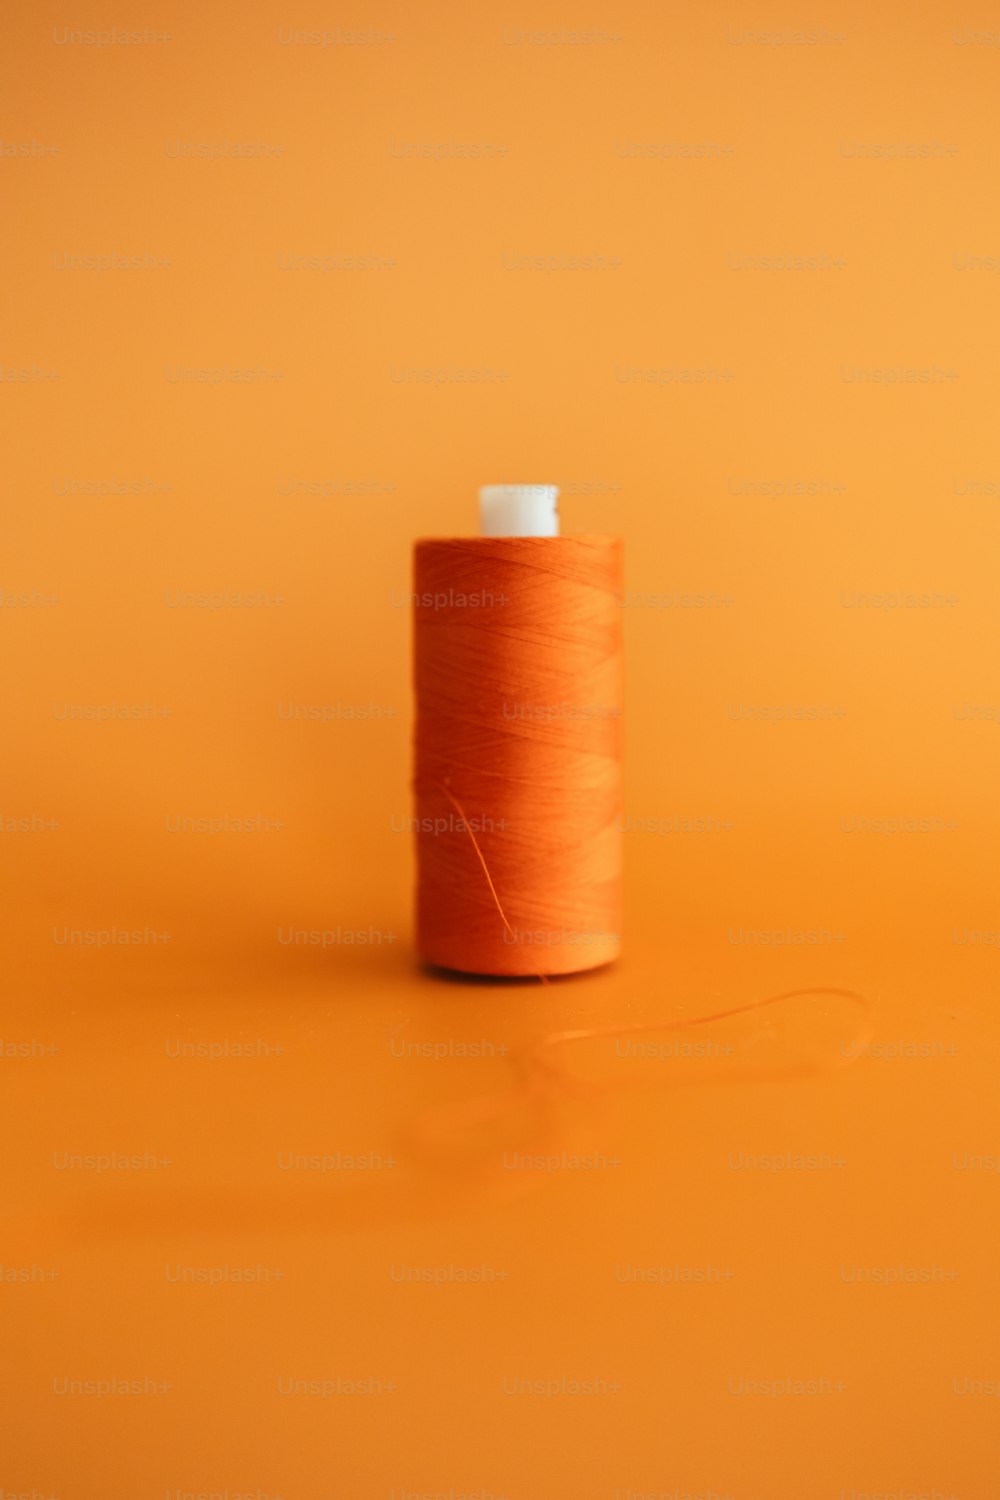 a spool of thread on an orange background